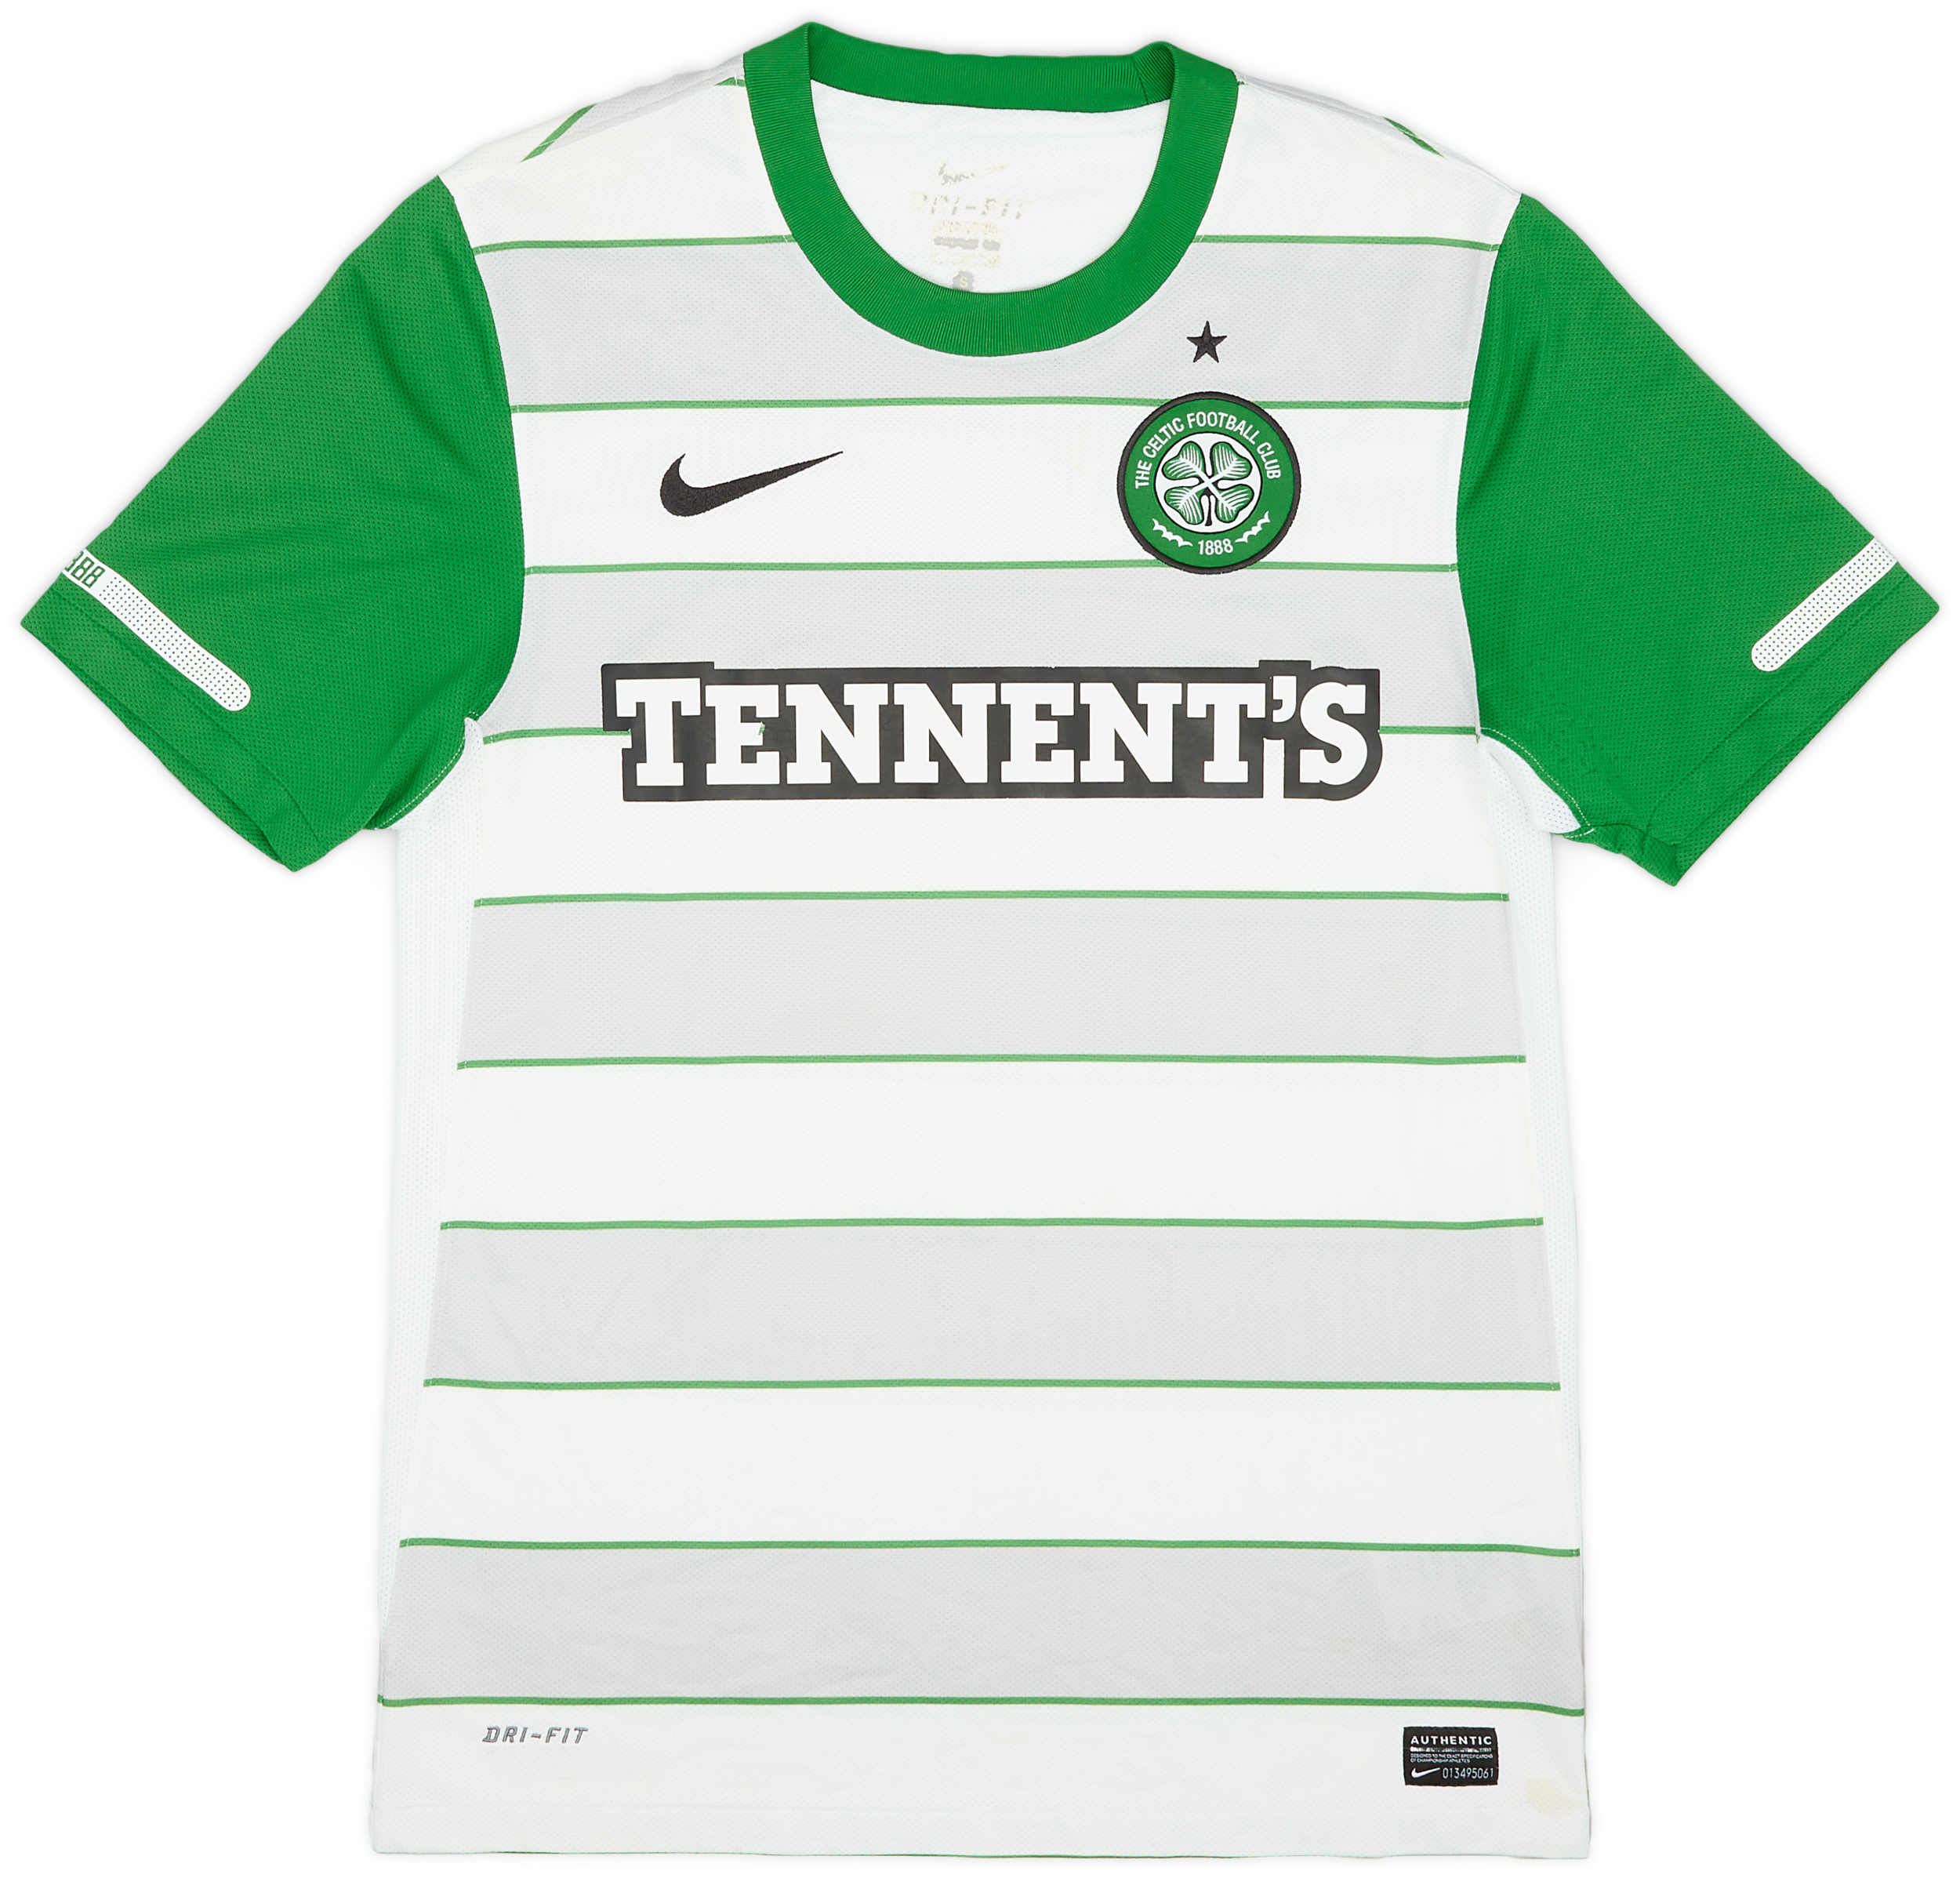 Celtic FC Football Shirt 2011 2012 Original Nike Third Top Soccer Jersey  Large